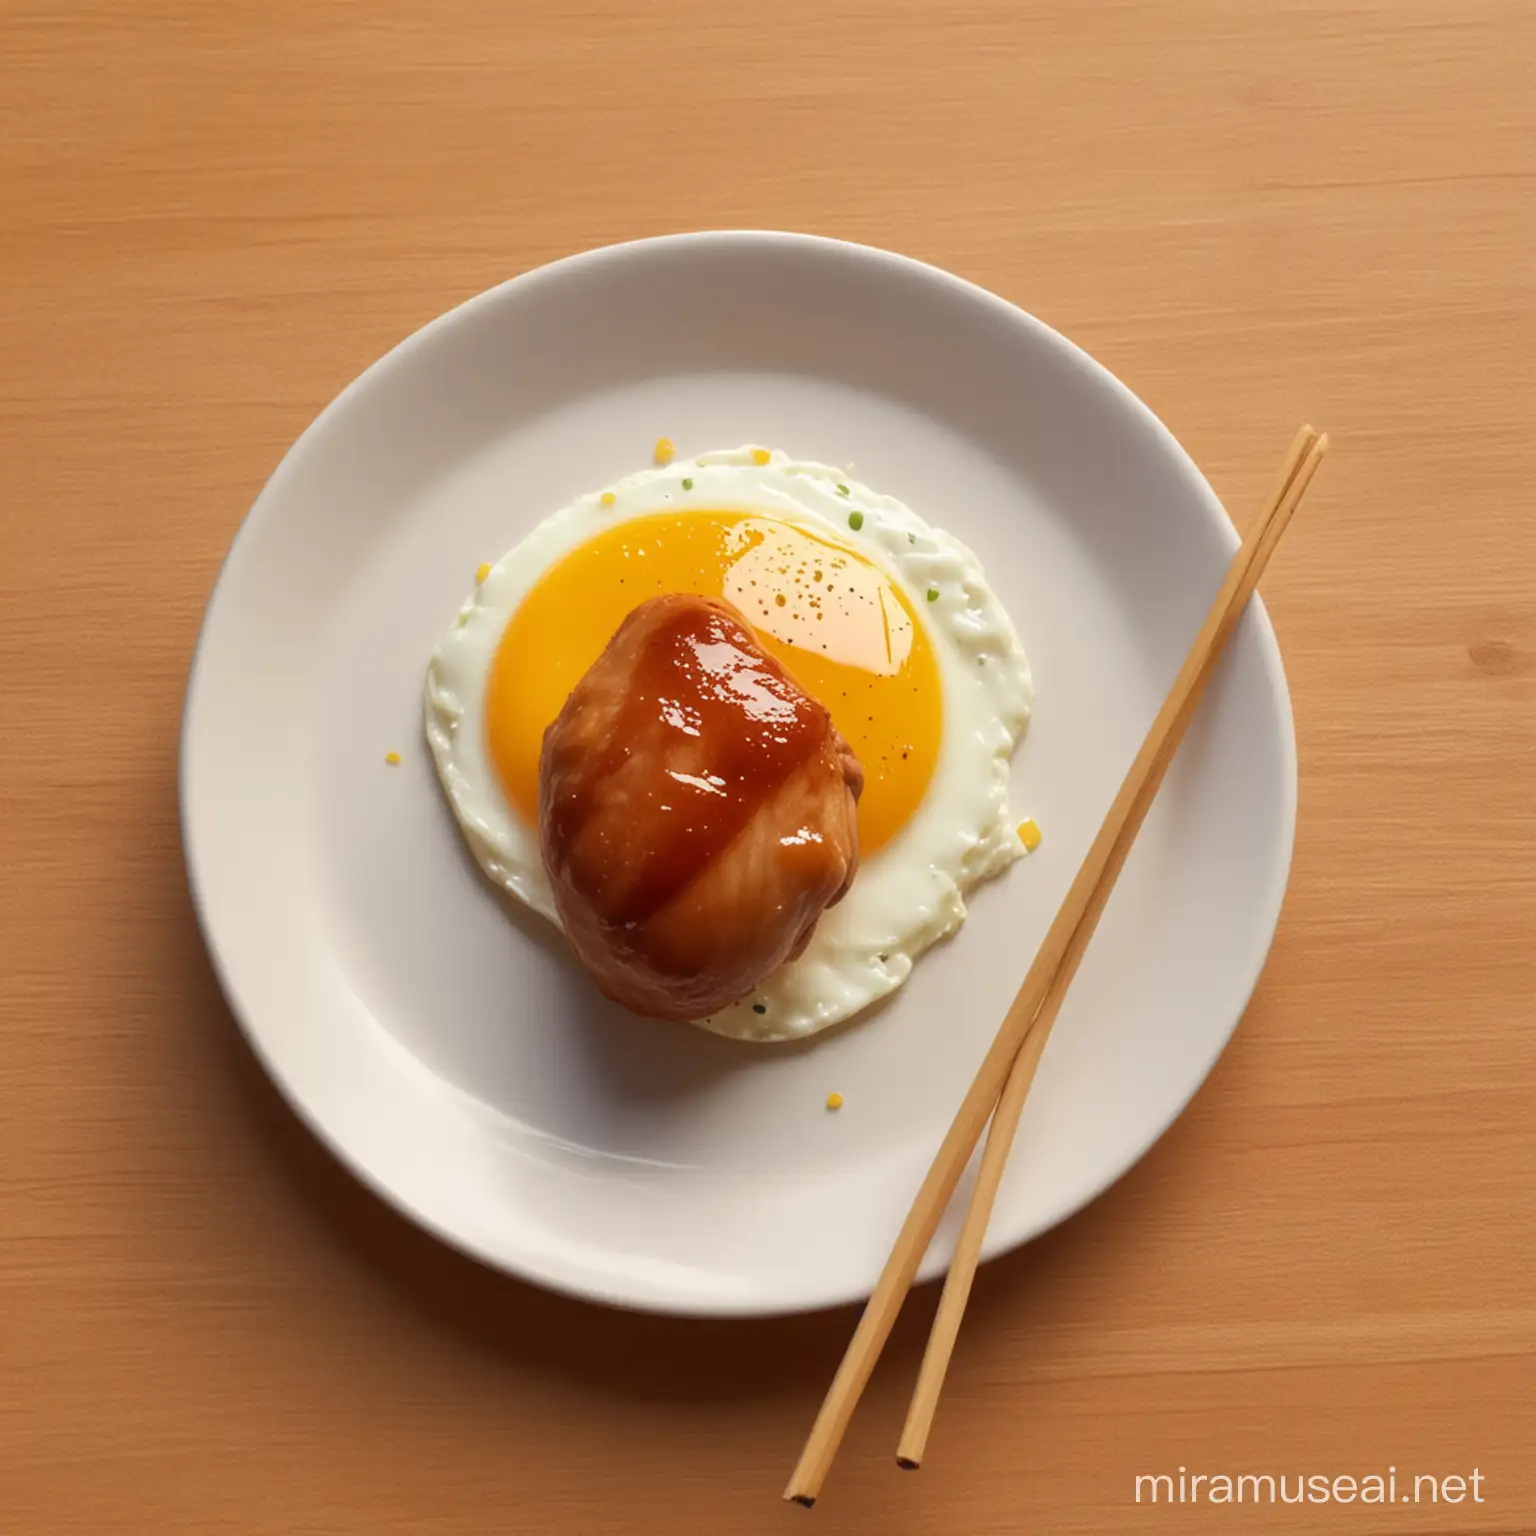 Use chopsticks to pick up  an egg and a chicken leg ,disney pixar style

